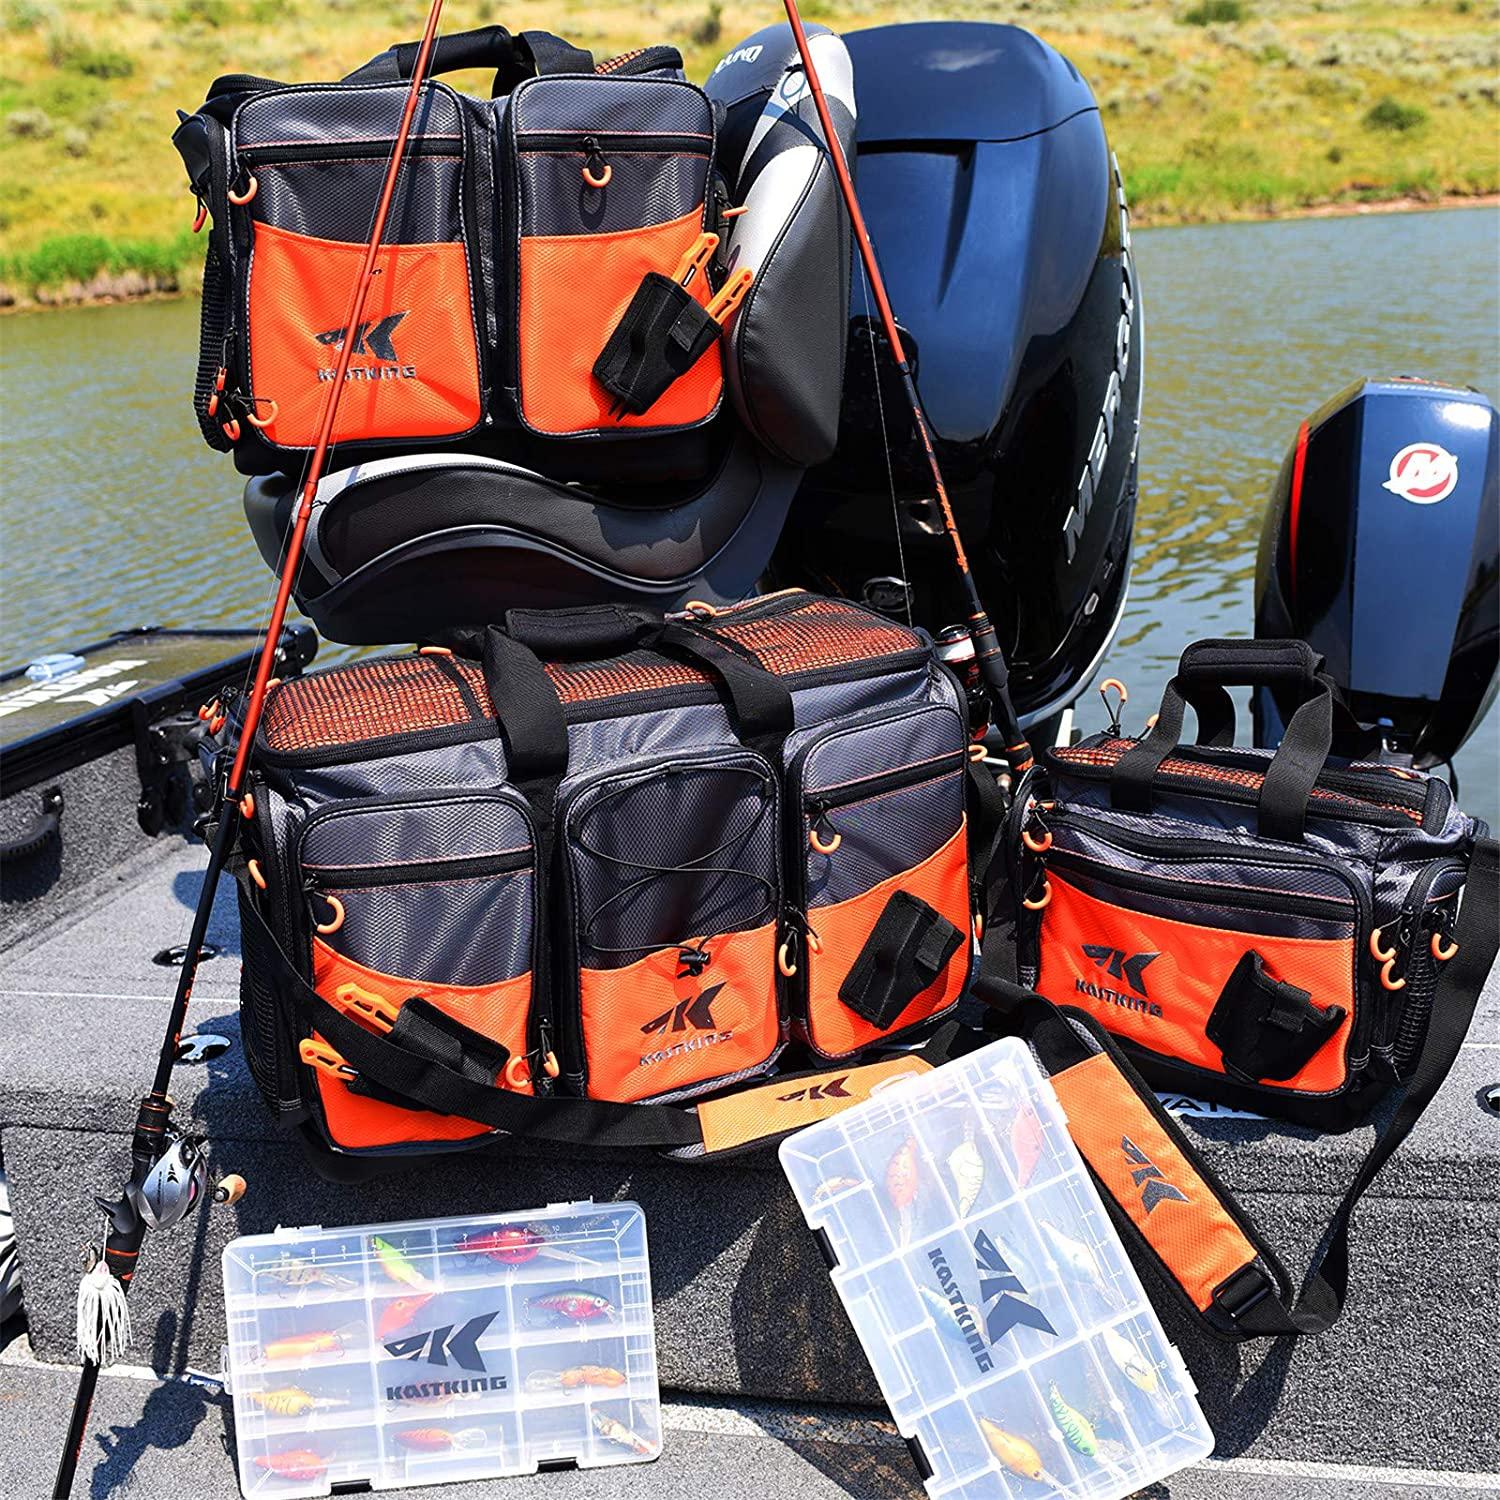  KastKing Fishing Gear & Tackle Bags - Saltwater